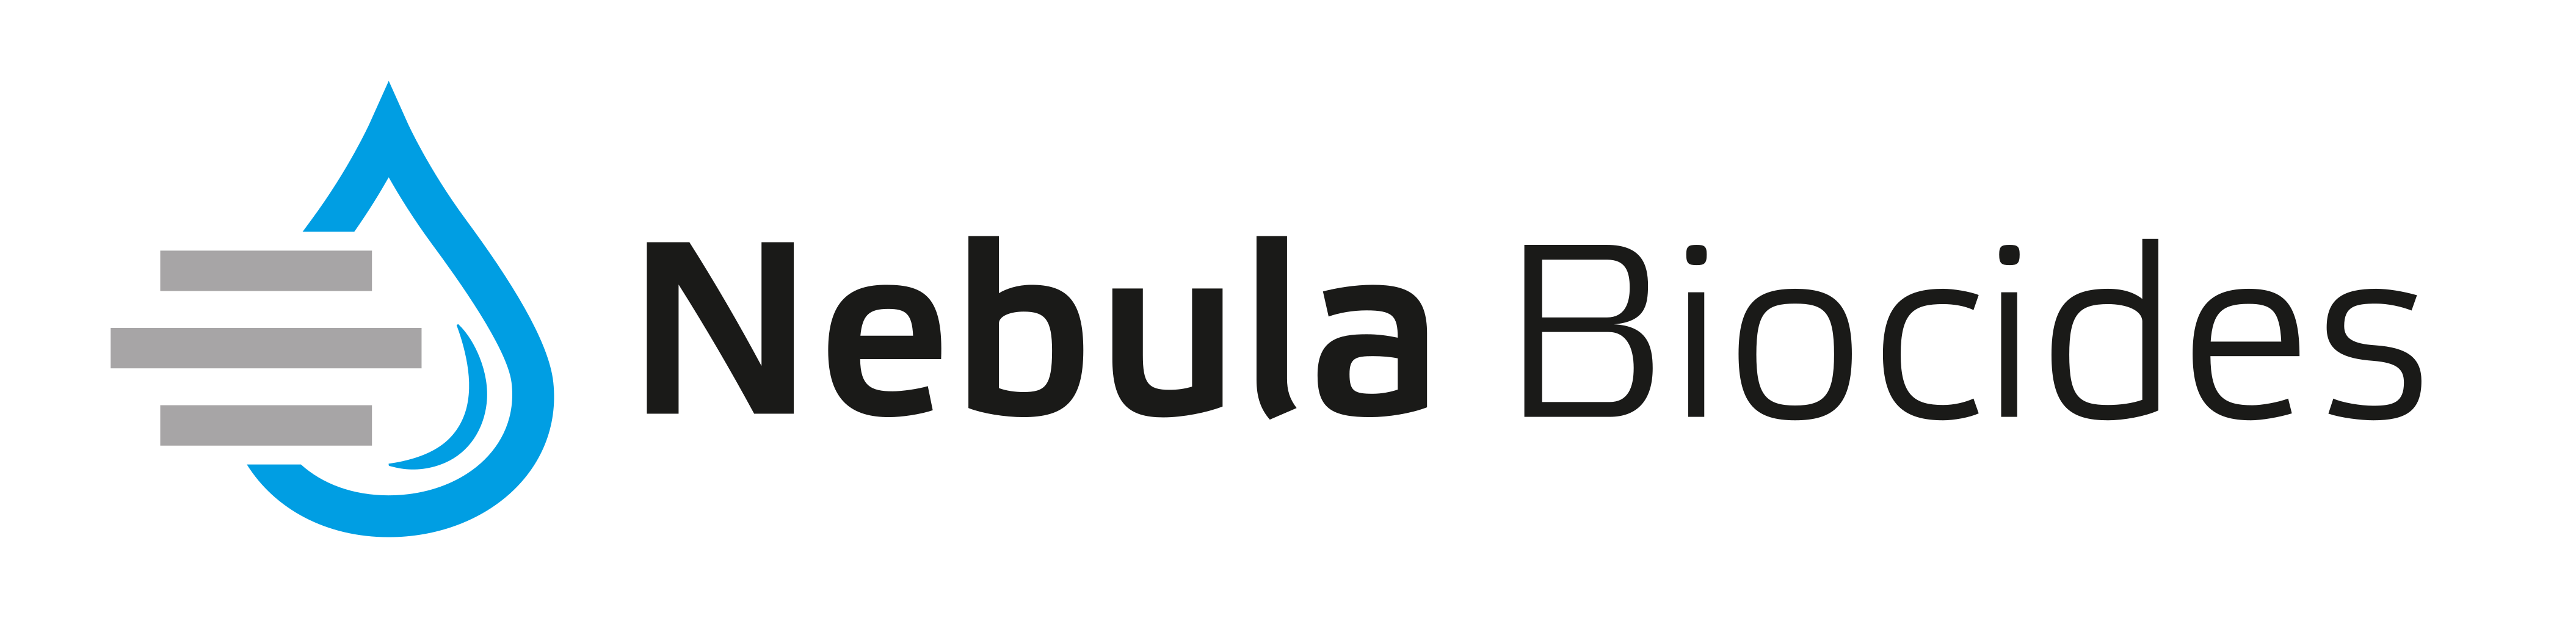 Nebula Biocides Logo